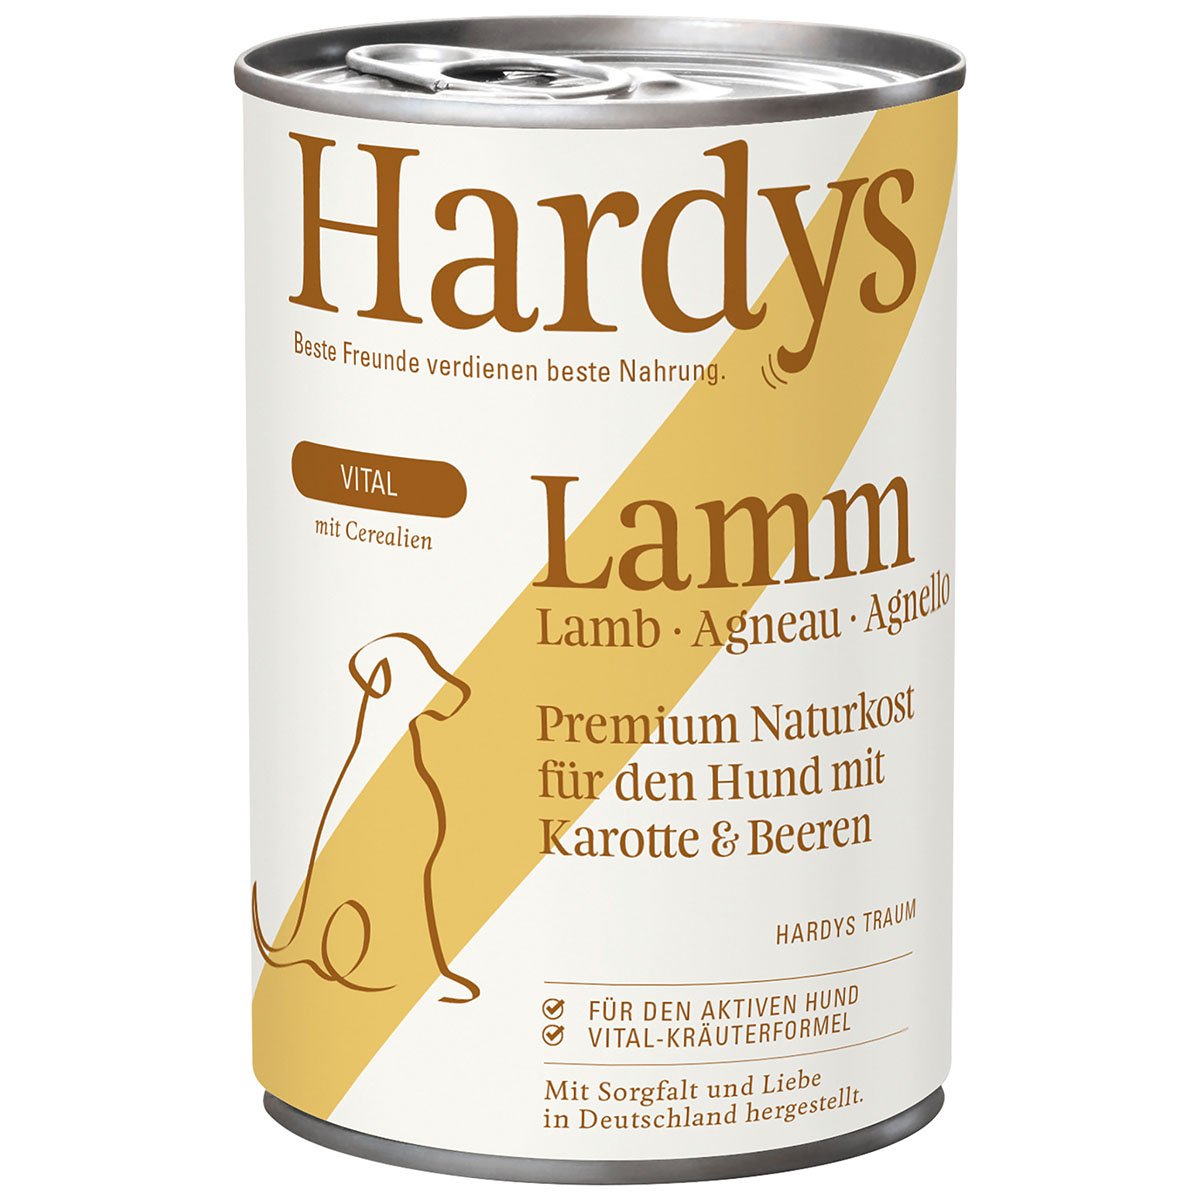 Hardys VITAL Lamm mit Karotte & Beeren 6x400g von Hardys